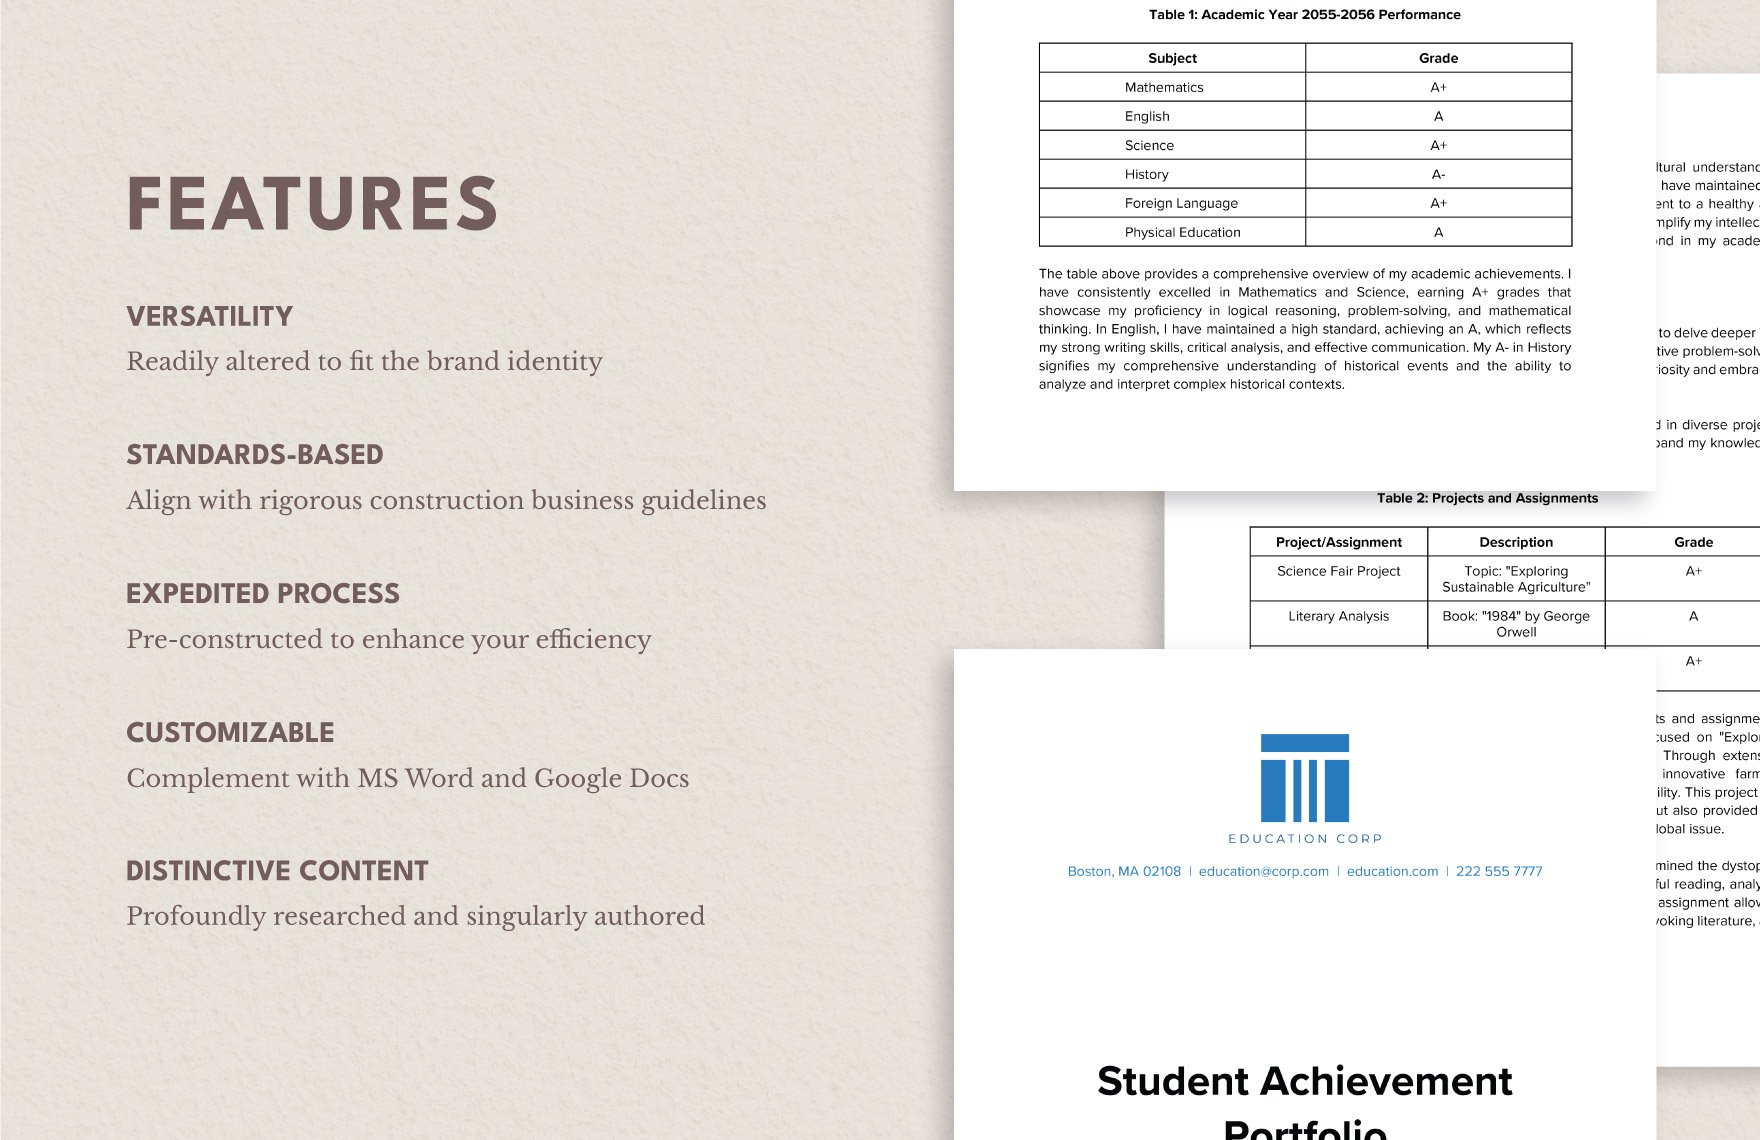 Education Student Achievement Portfolio Template